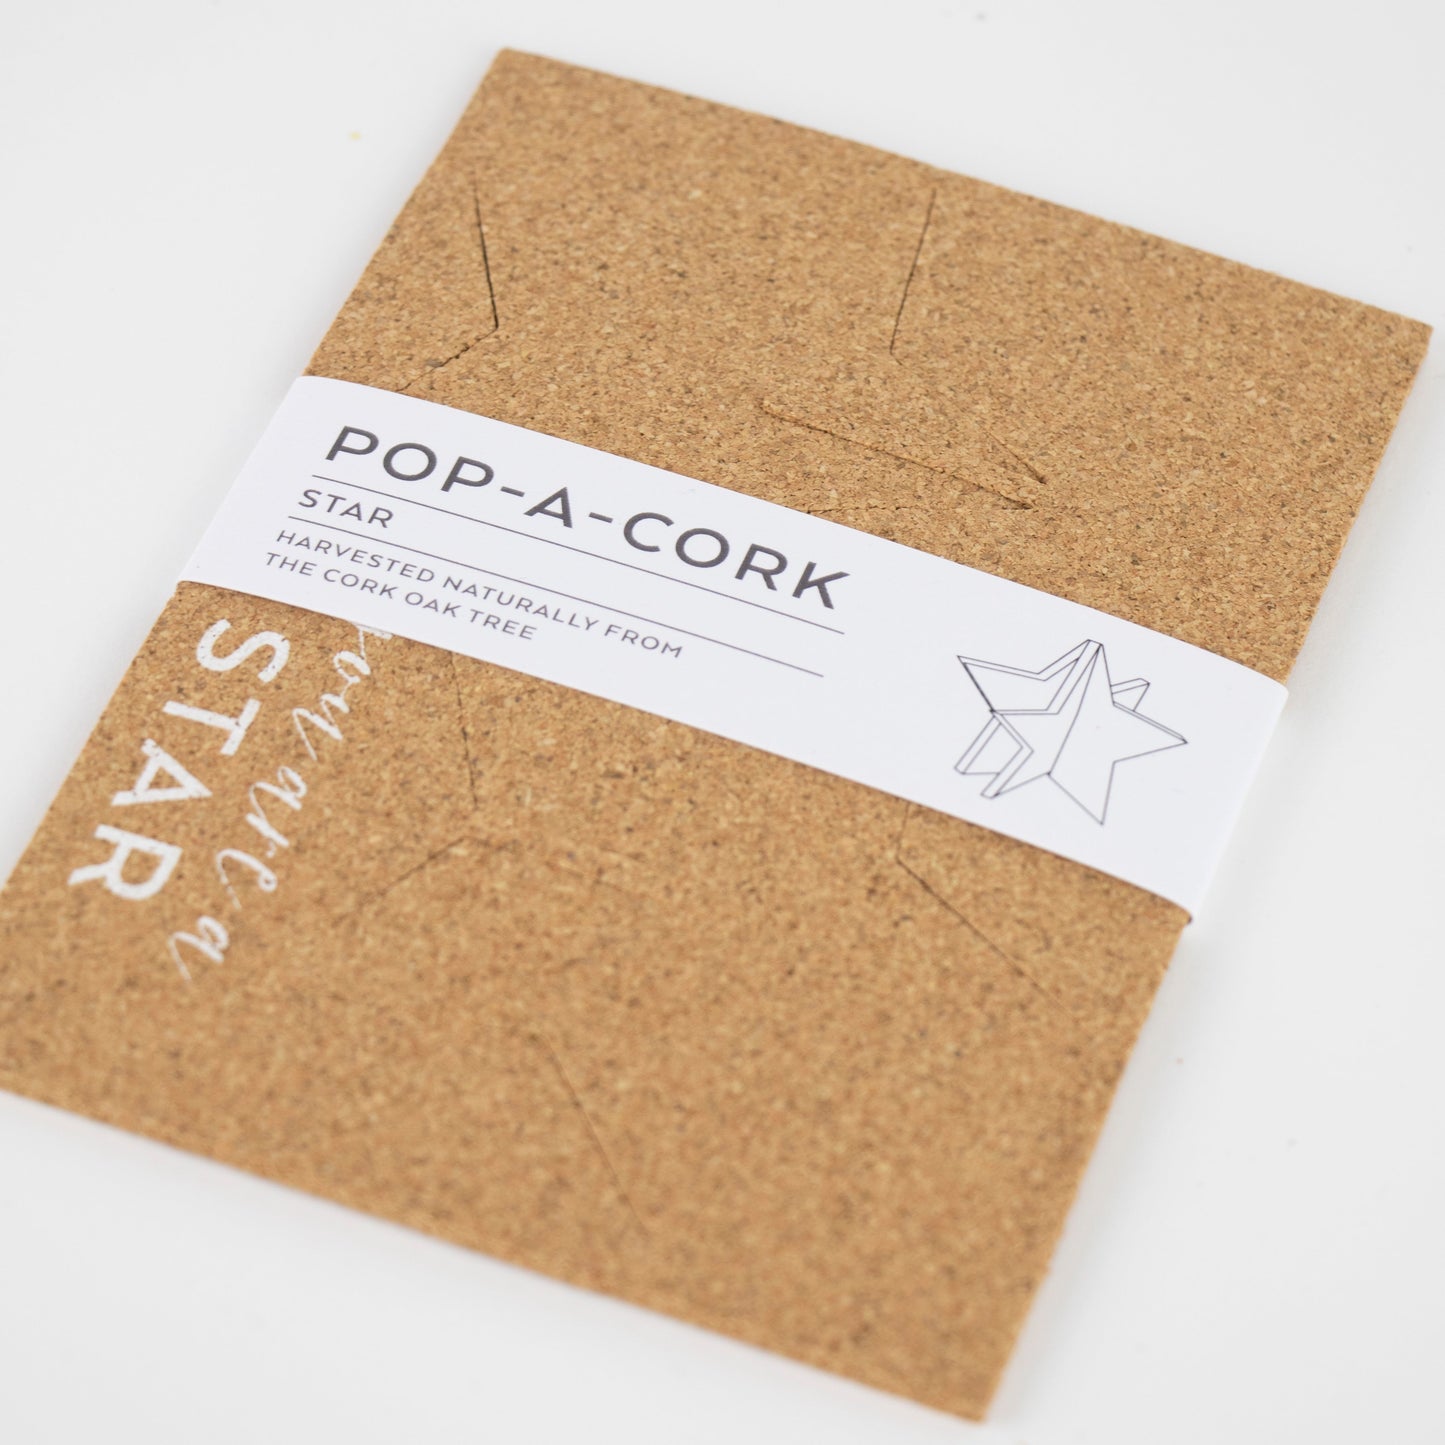 Organic Cork Decoration Pop-A-Cork | Star